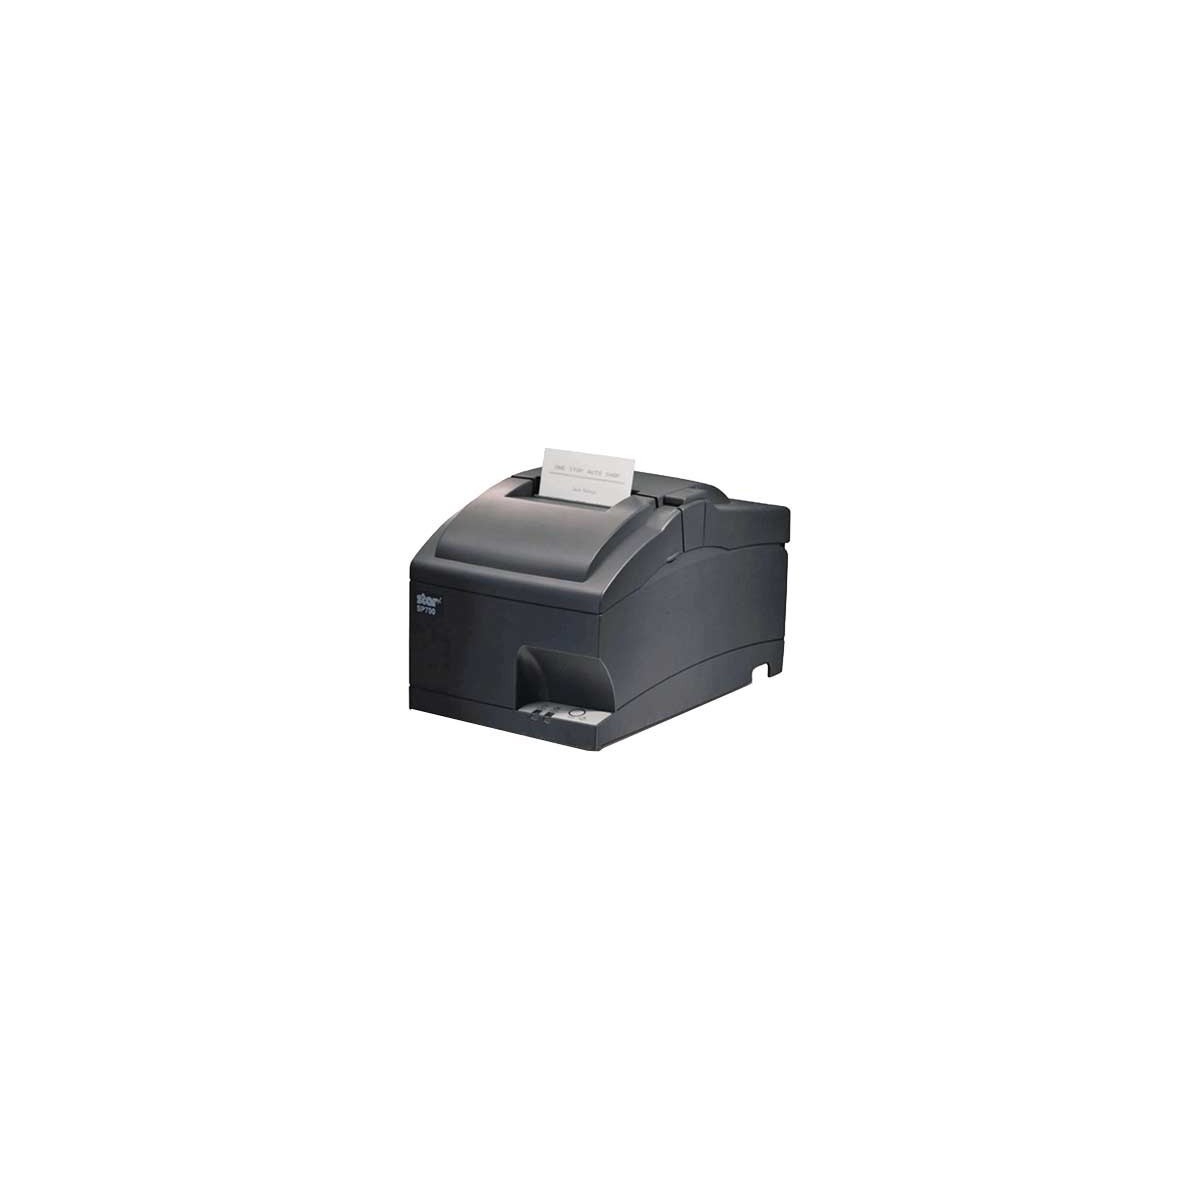 Star Micronics SP700 - Dot matrix - POS printer - 8.9 lps - 76 mm - 3.18 kg - 160 x 245 x 152 mm